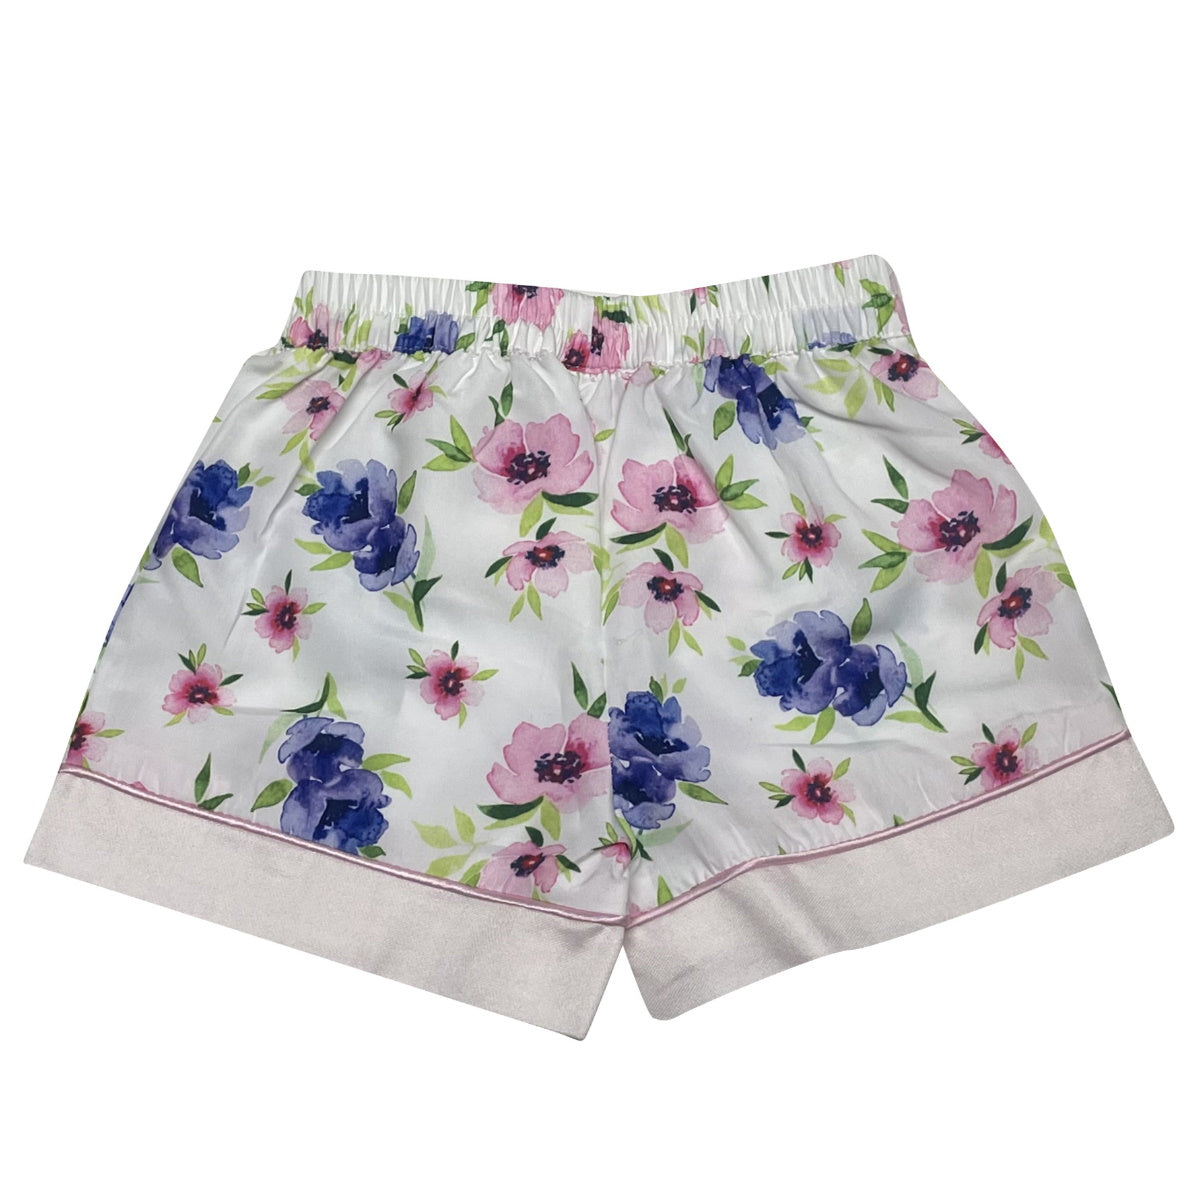 Gaialuna shorts neonata bianco